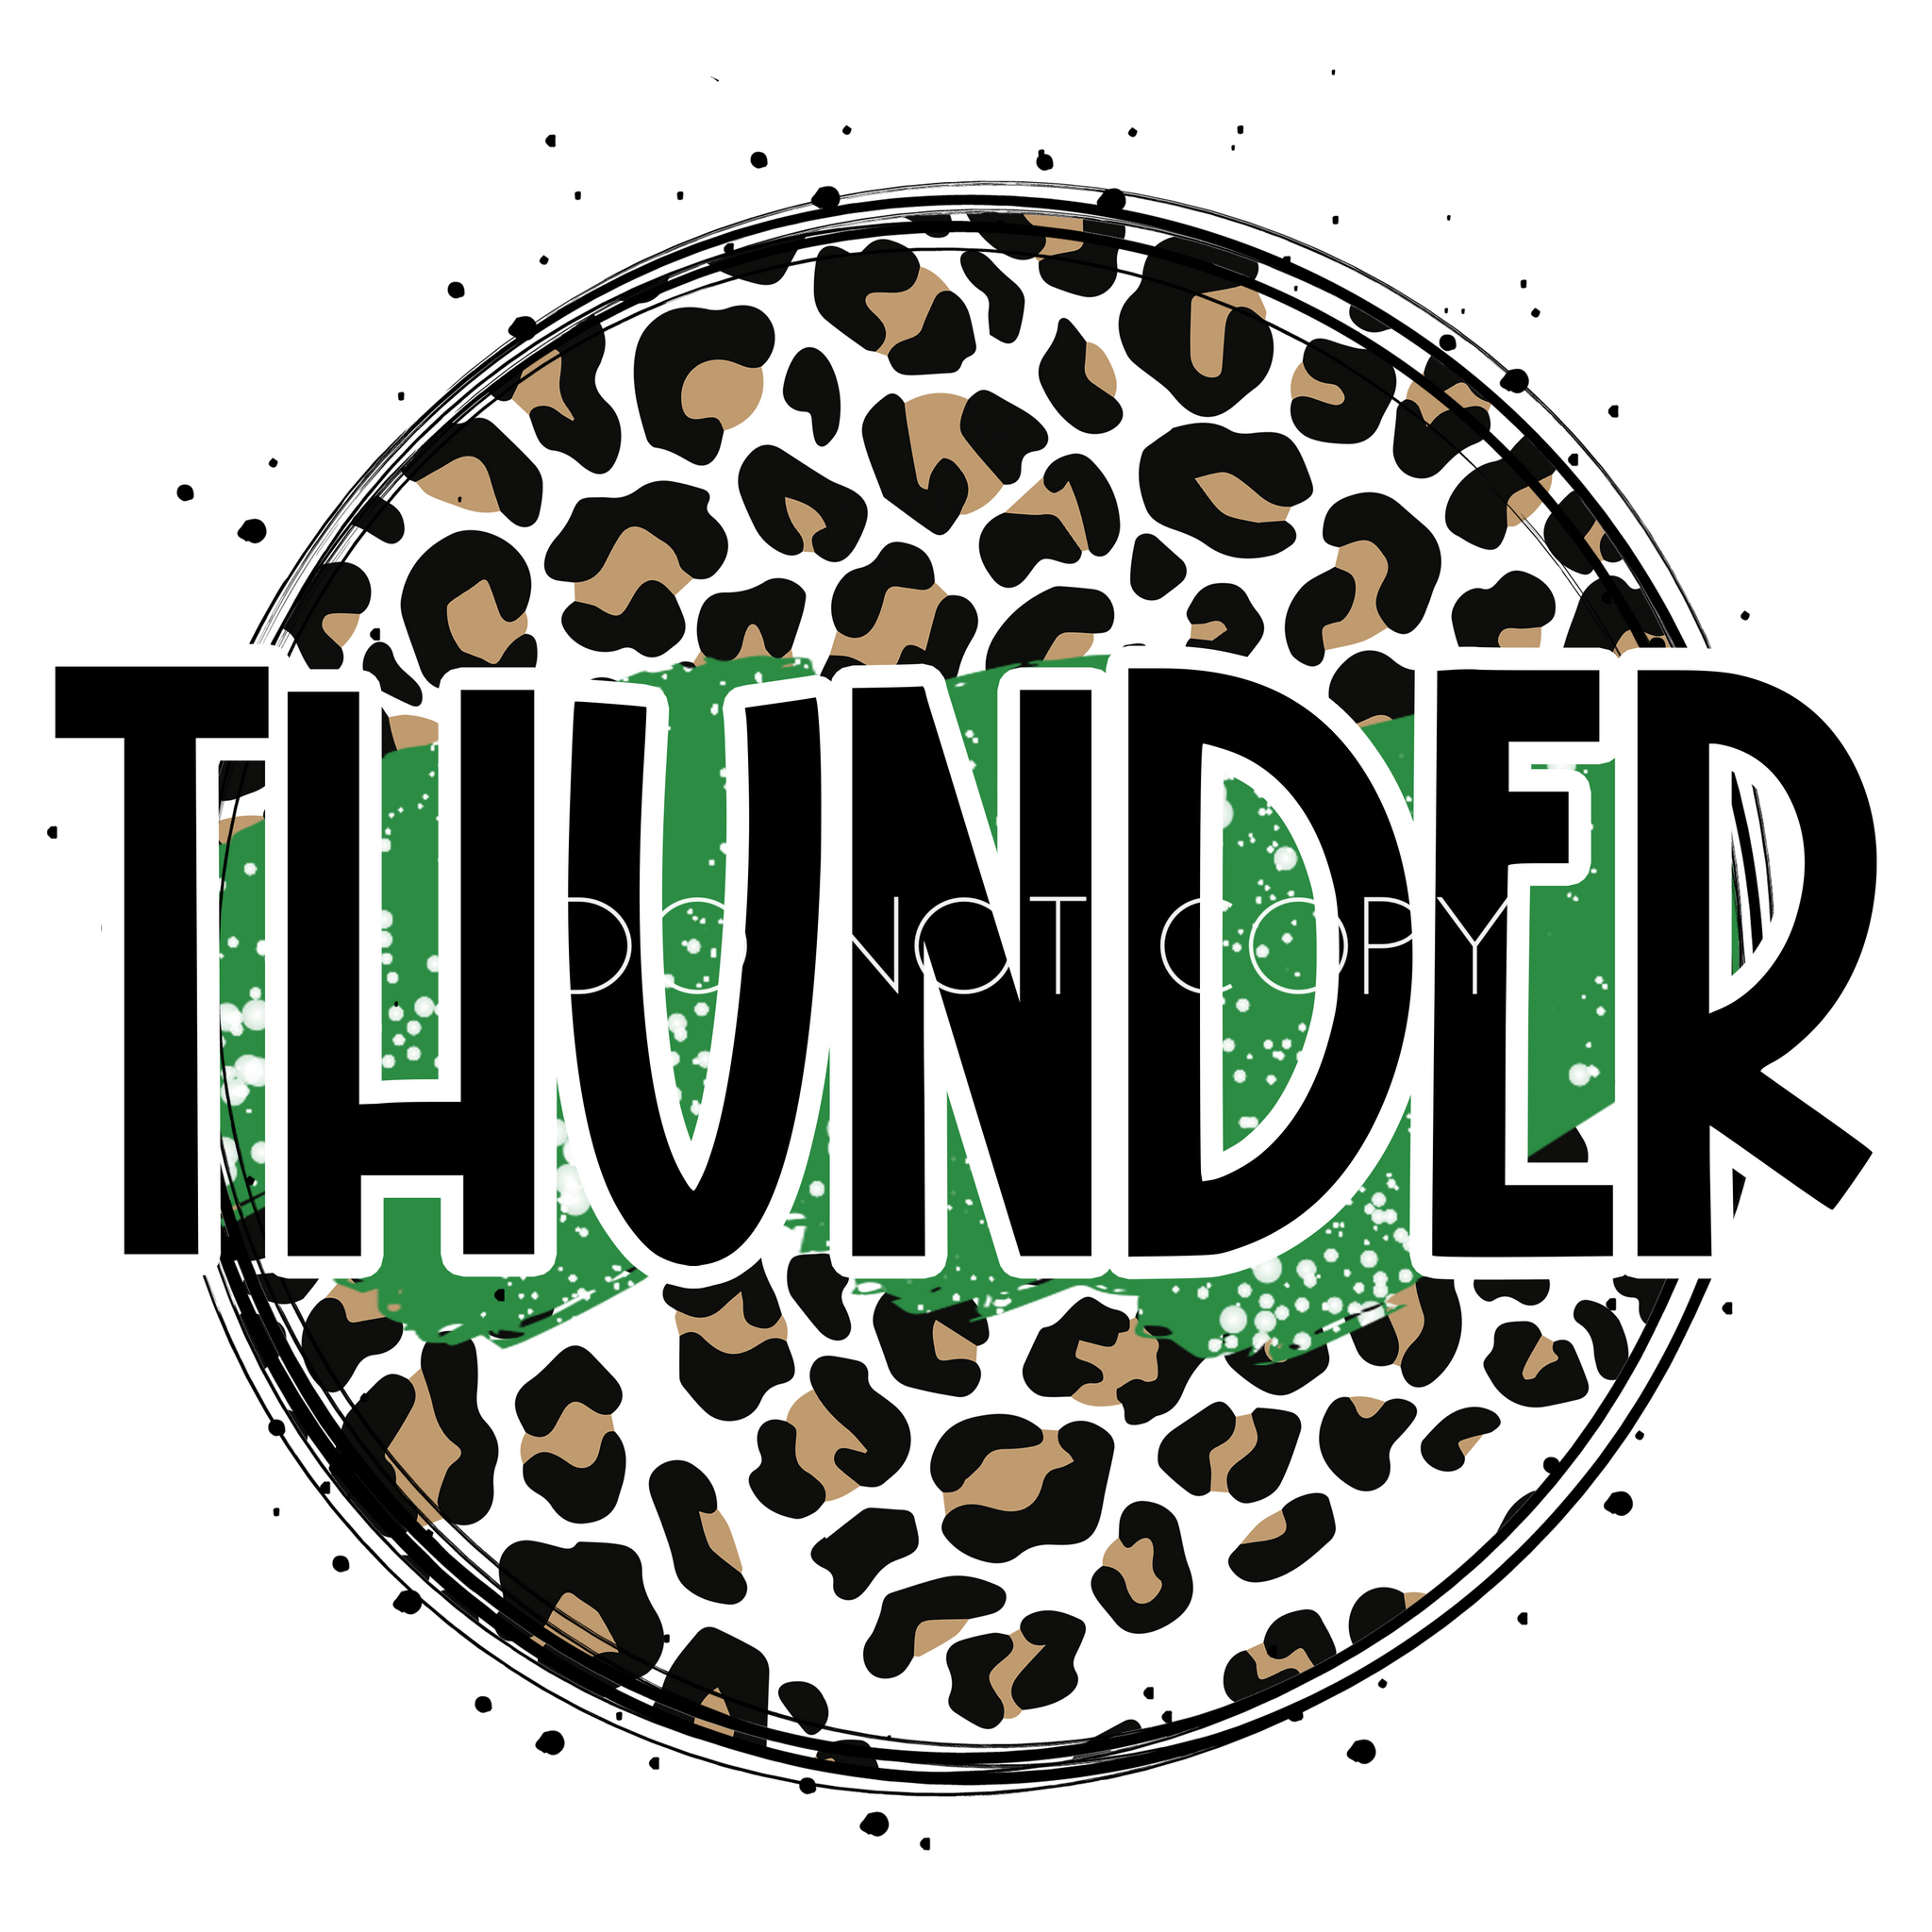 Thunder Green - Leopard Circle